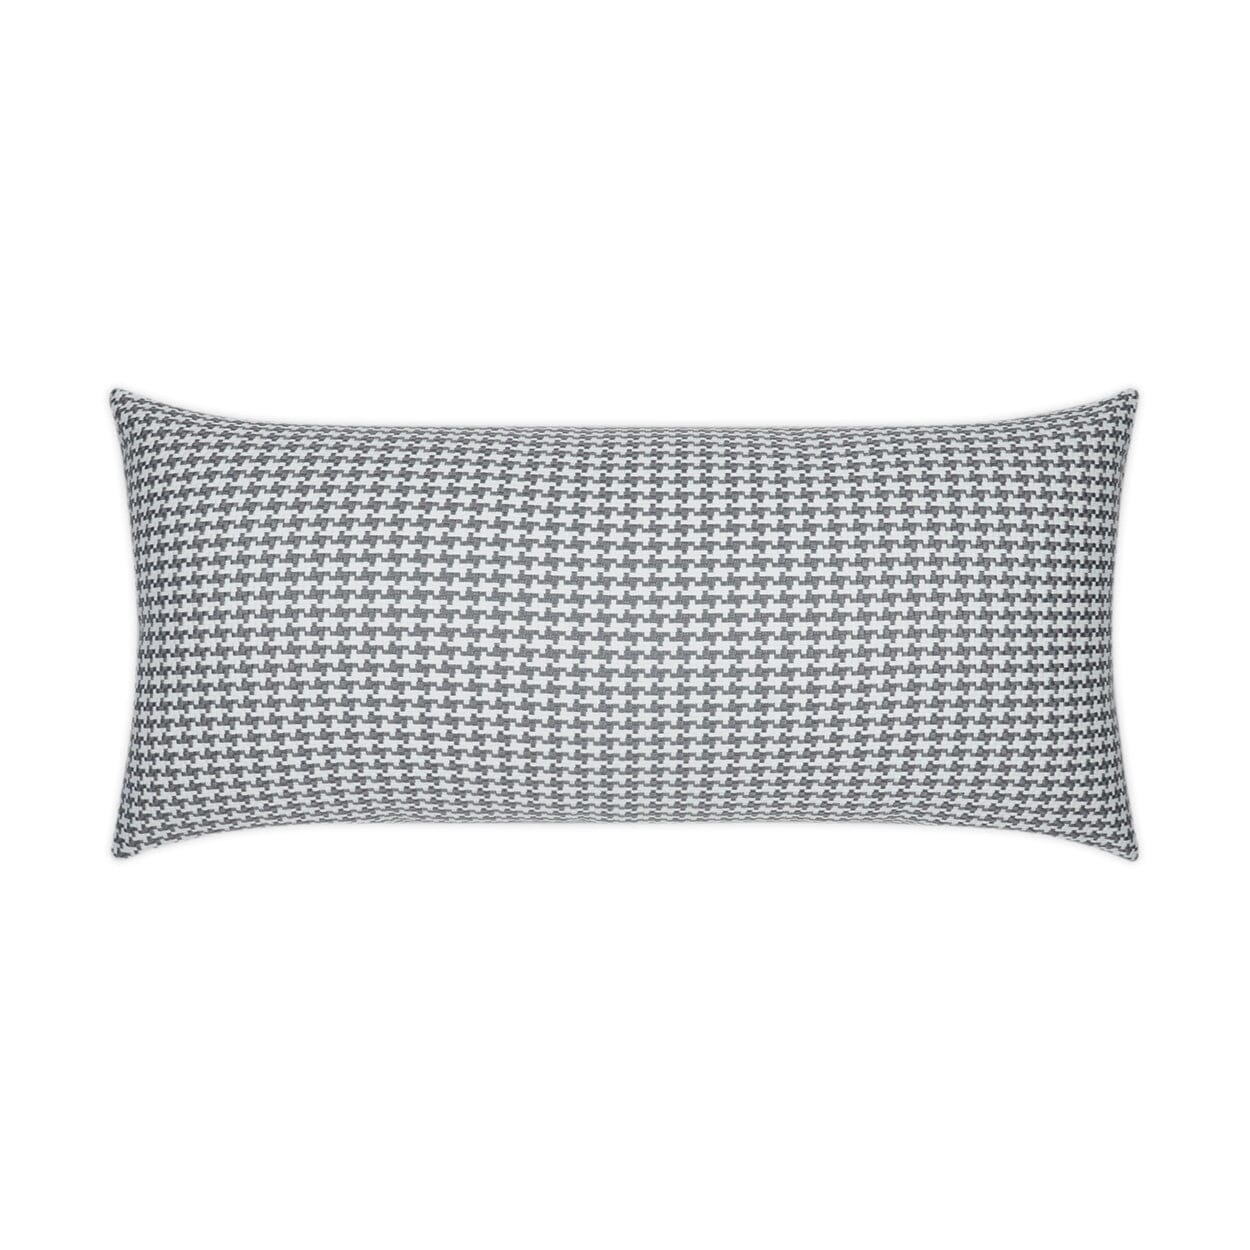 D.V. Kap 12" x 24" Outdoor Lumbar Pillow | Bedford Stone Pillows D.V Kap Outdoor